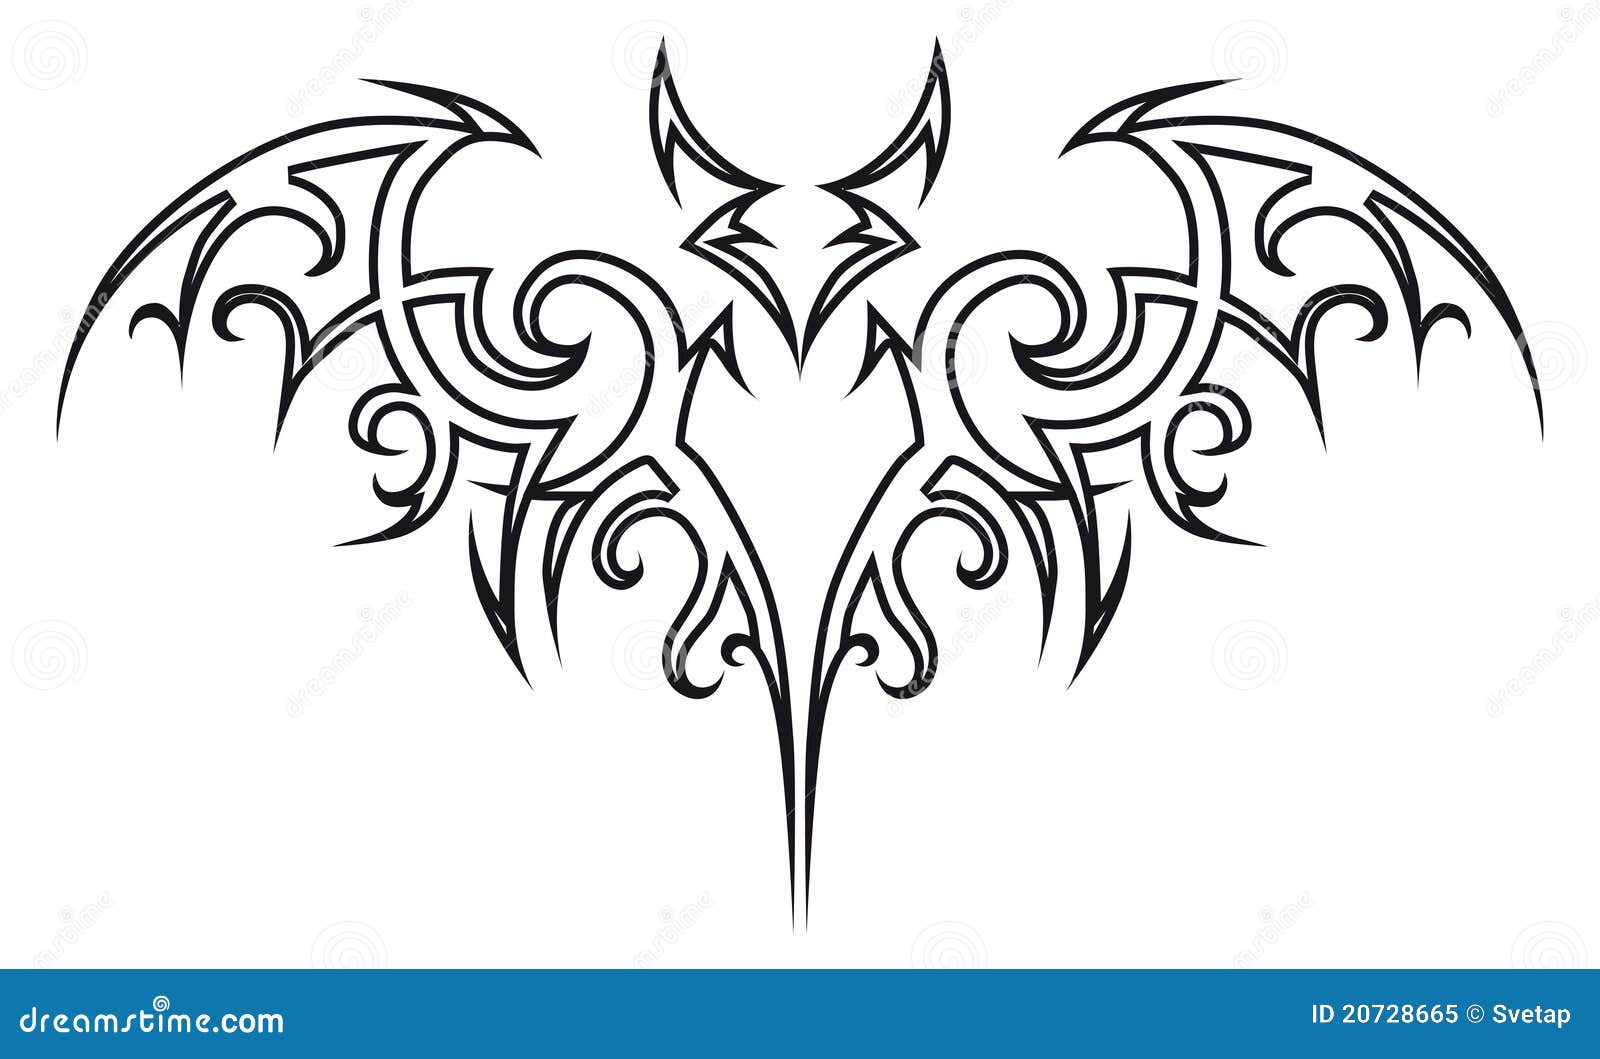 Discover more than 80 bat silhouette tattoo latest - thtantai2